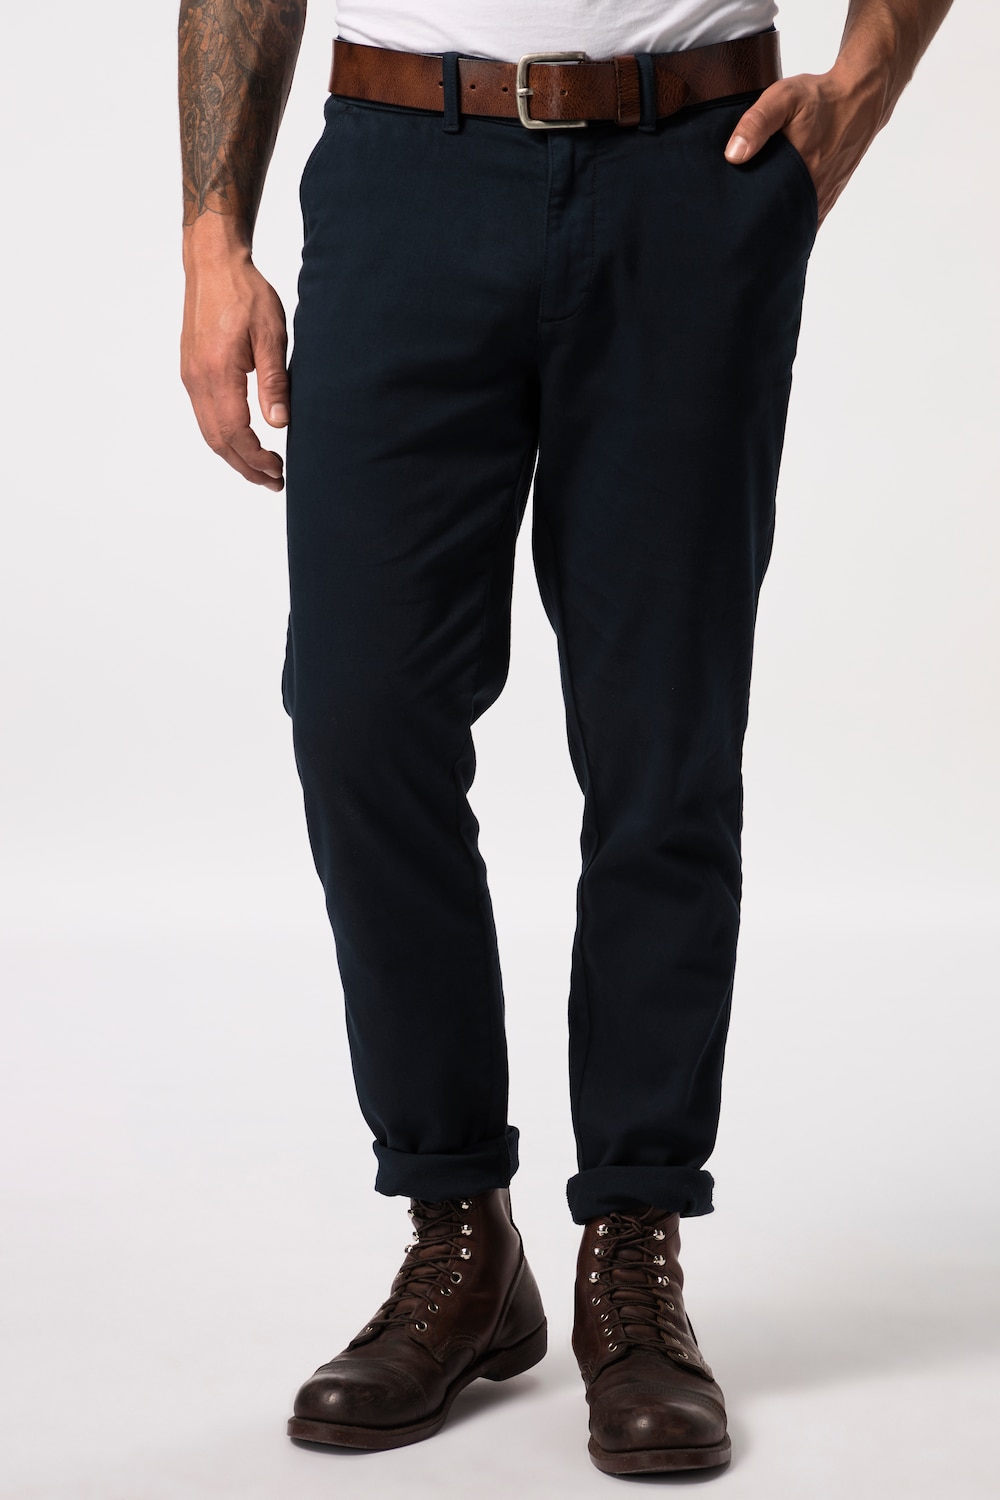 grandes tailles pantalon chino flexnamic®, hommes, bleu, taille: 70, coton, jp1880